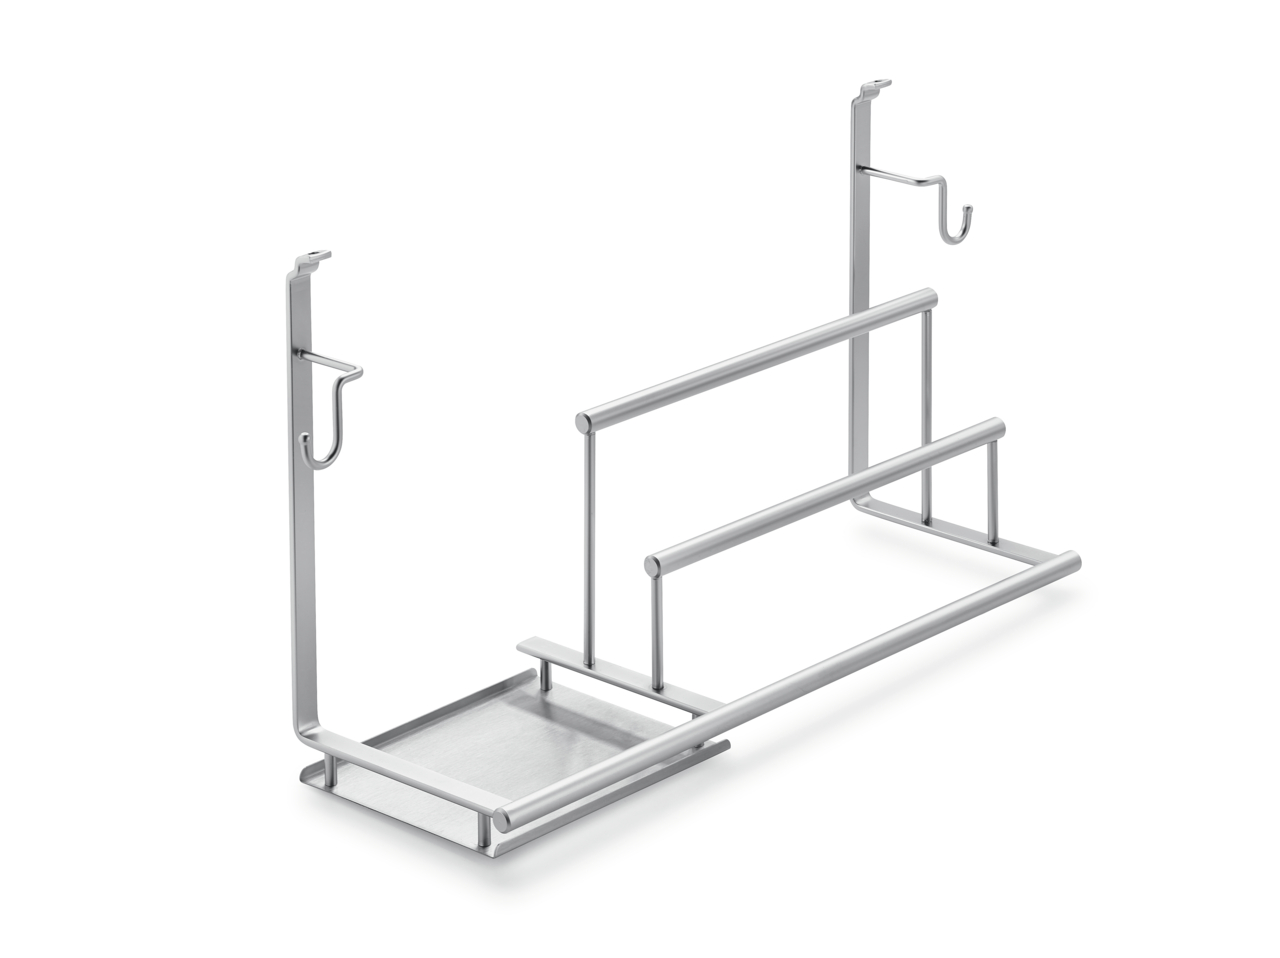  Linero 2000 holder for dishwashing paraphernalia, stainless steel coloured